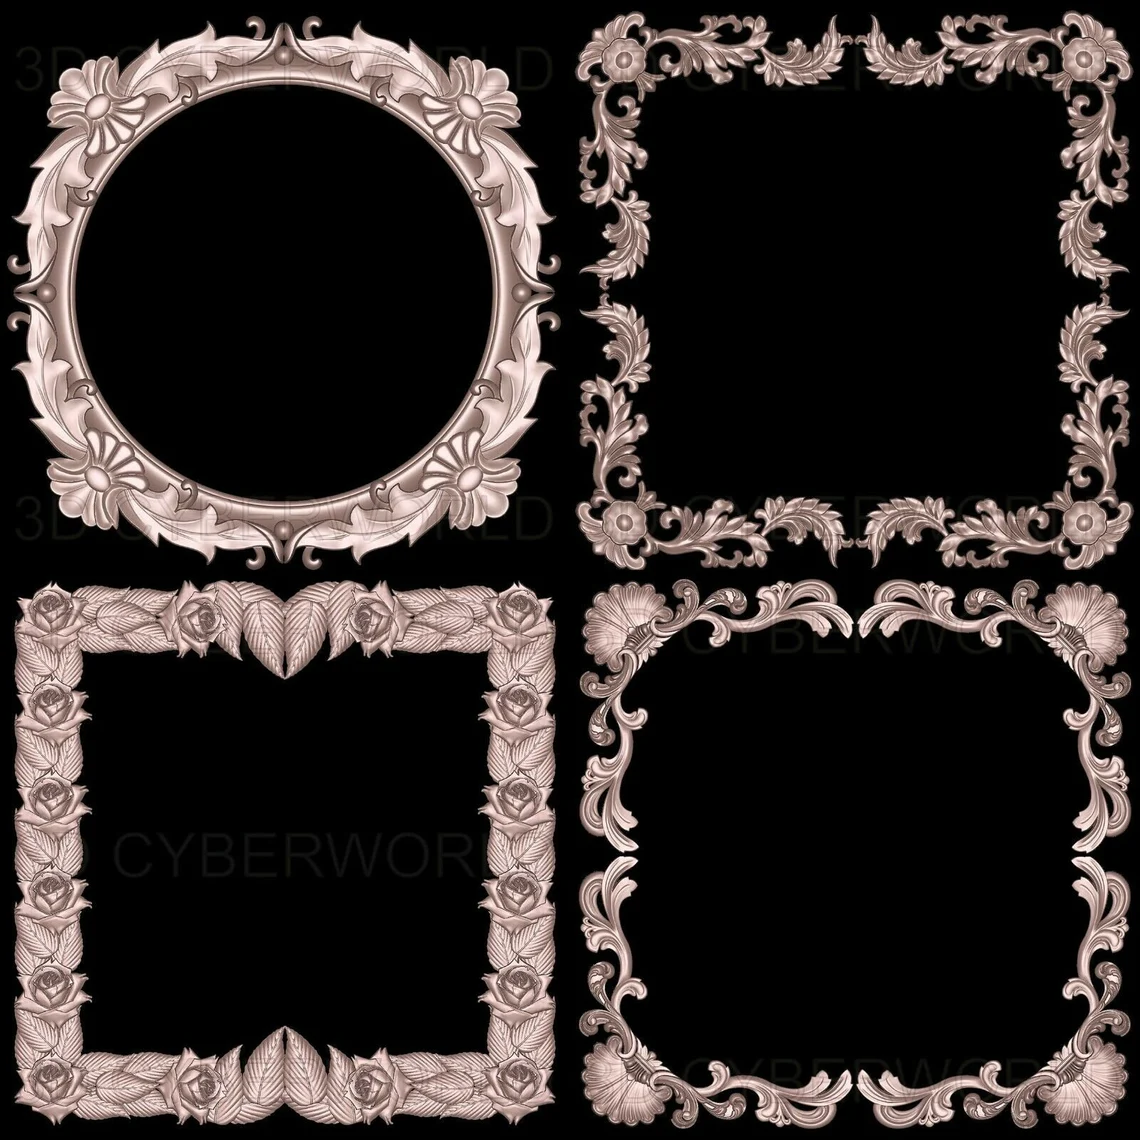 40 pièces 3d stl corners/frames models set for cnc artcam relief printer download